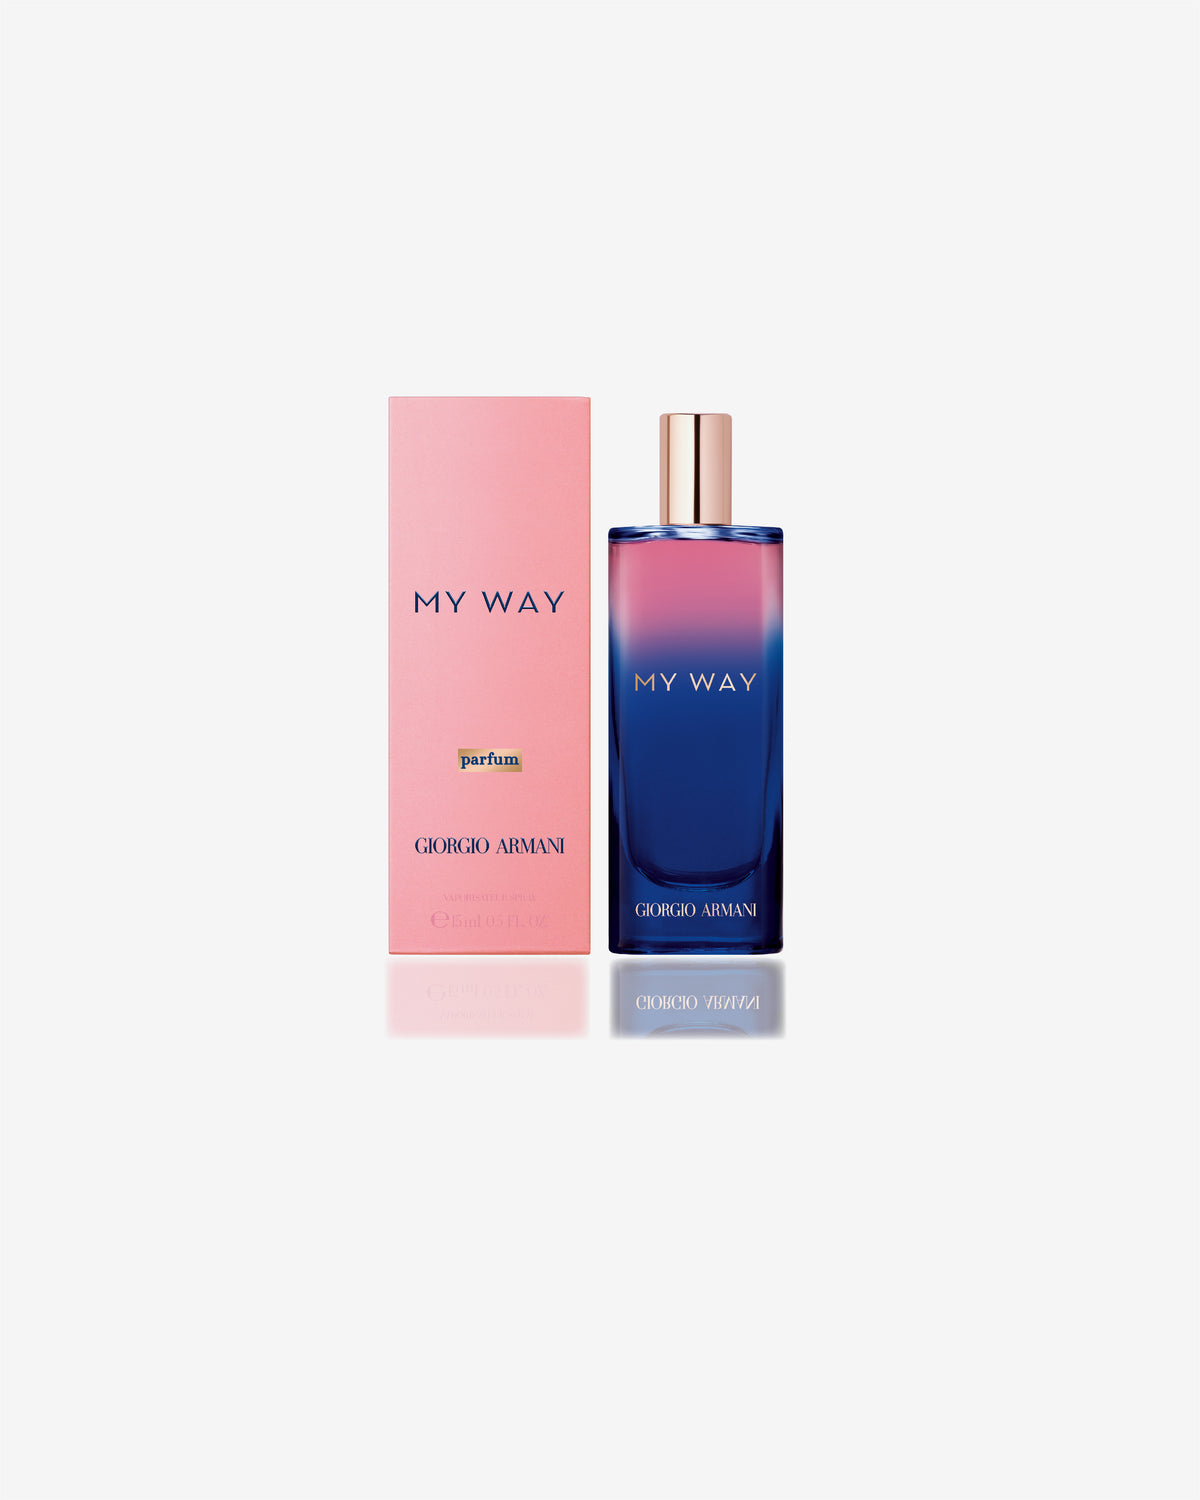 Gift: ARMANI My Way Parfum 15ml